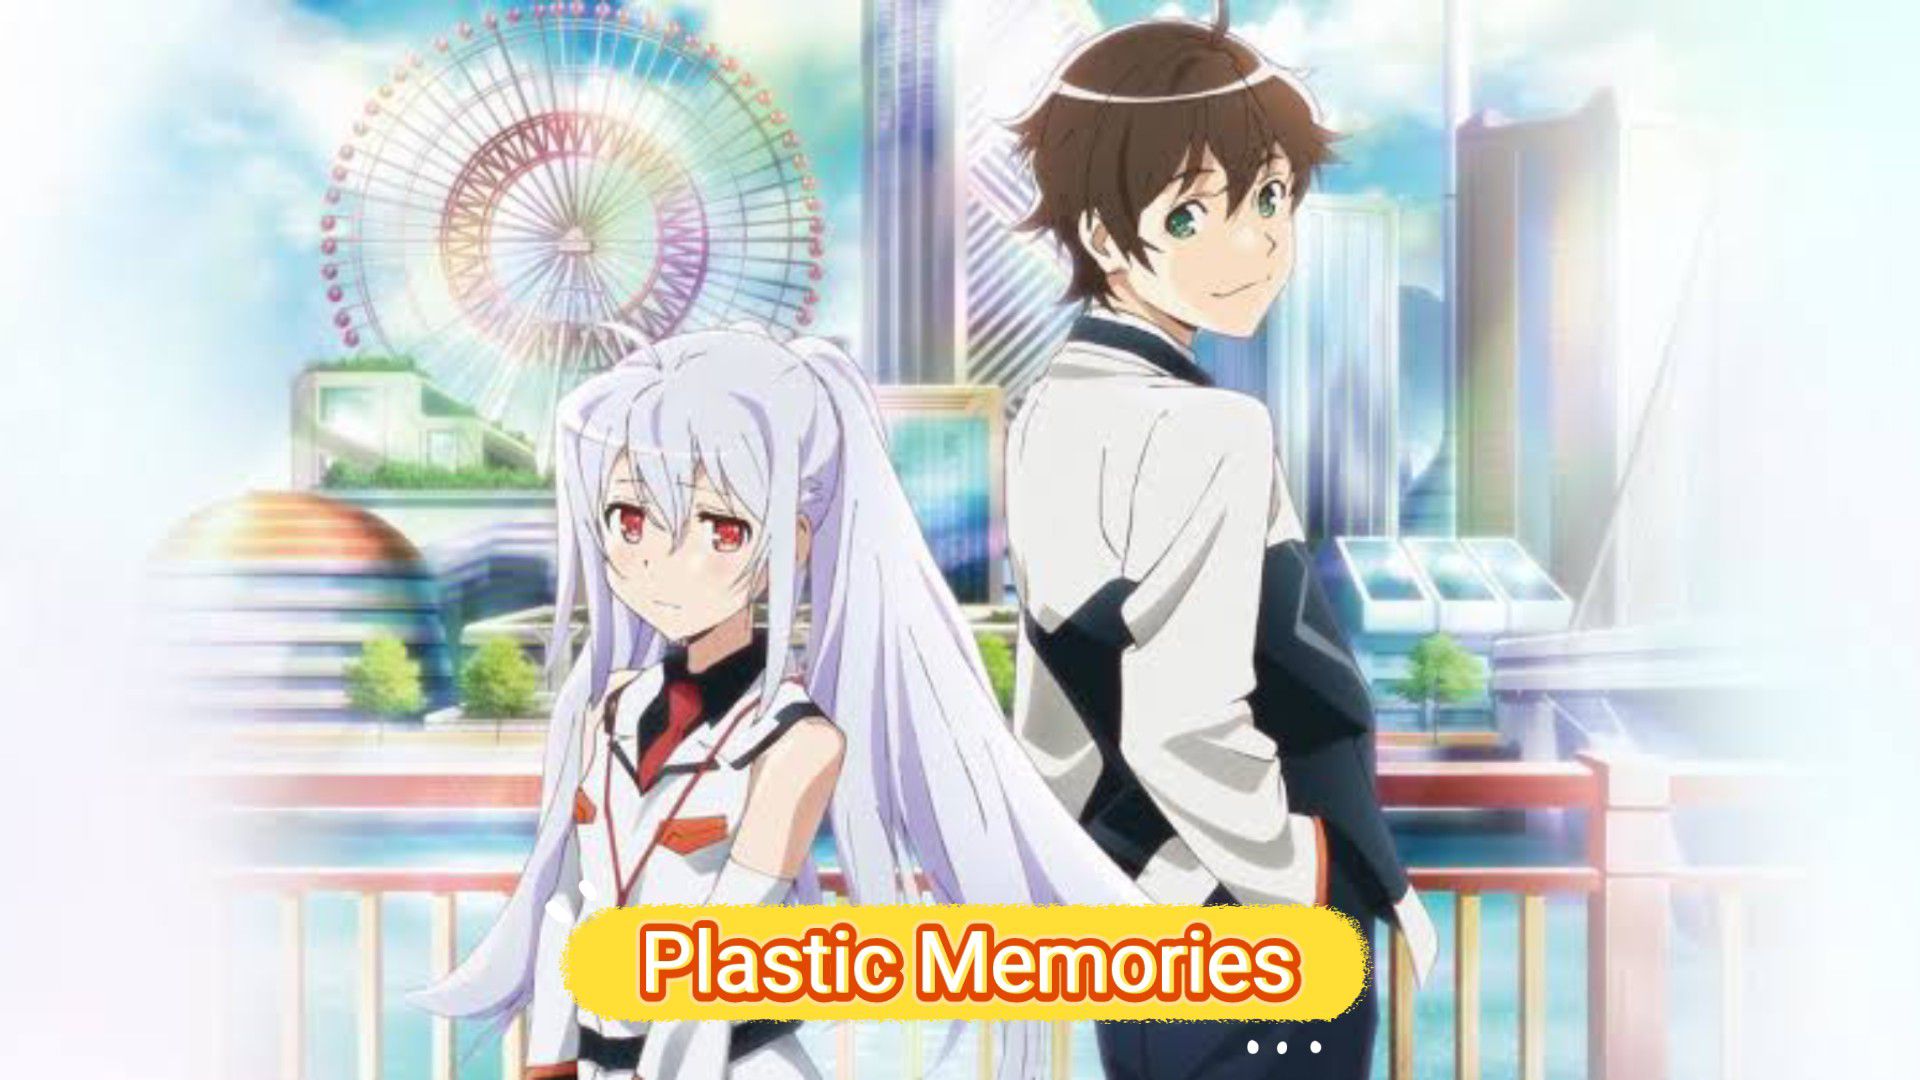 Watch Plastic Memories season 1 episode 3 streaming online